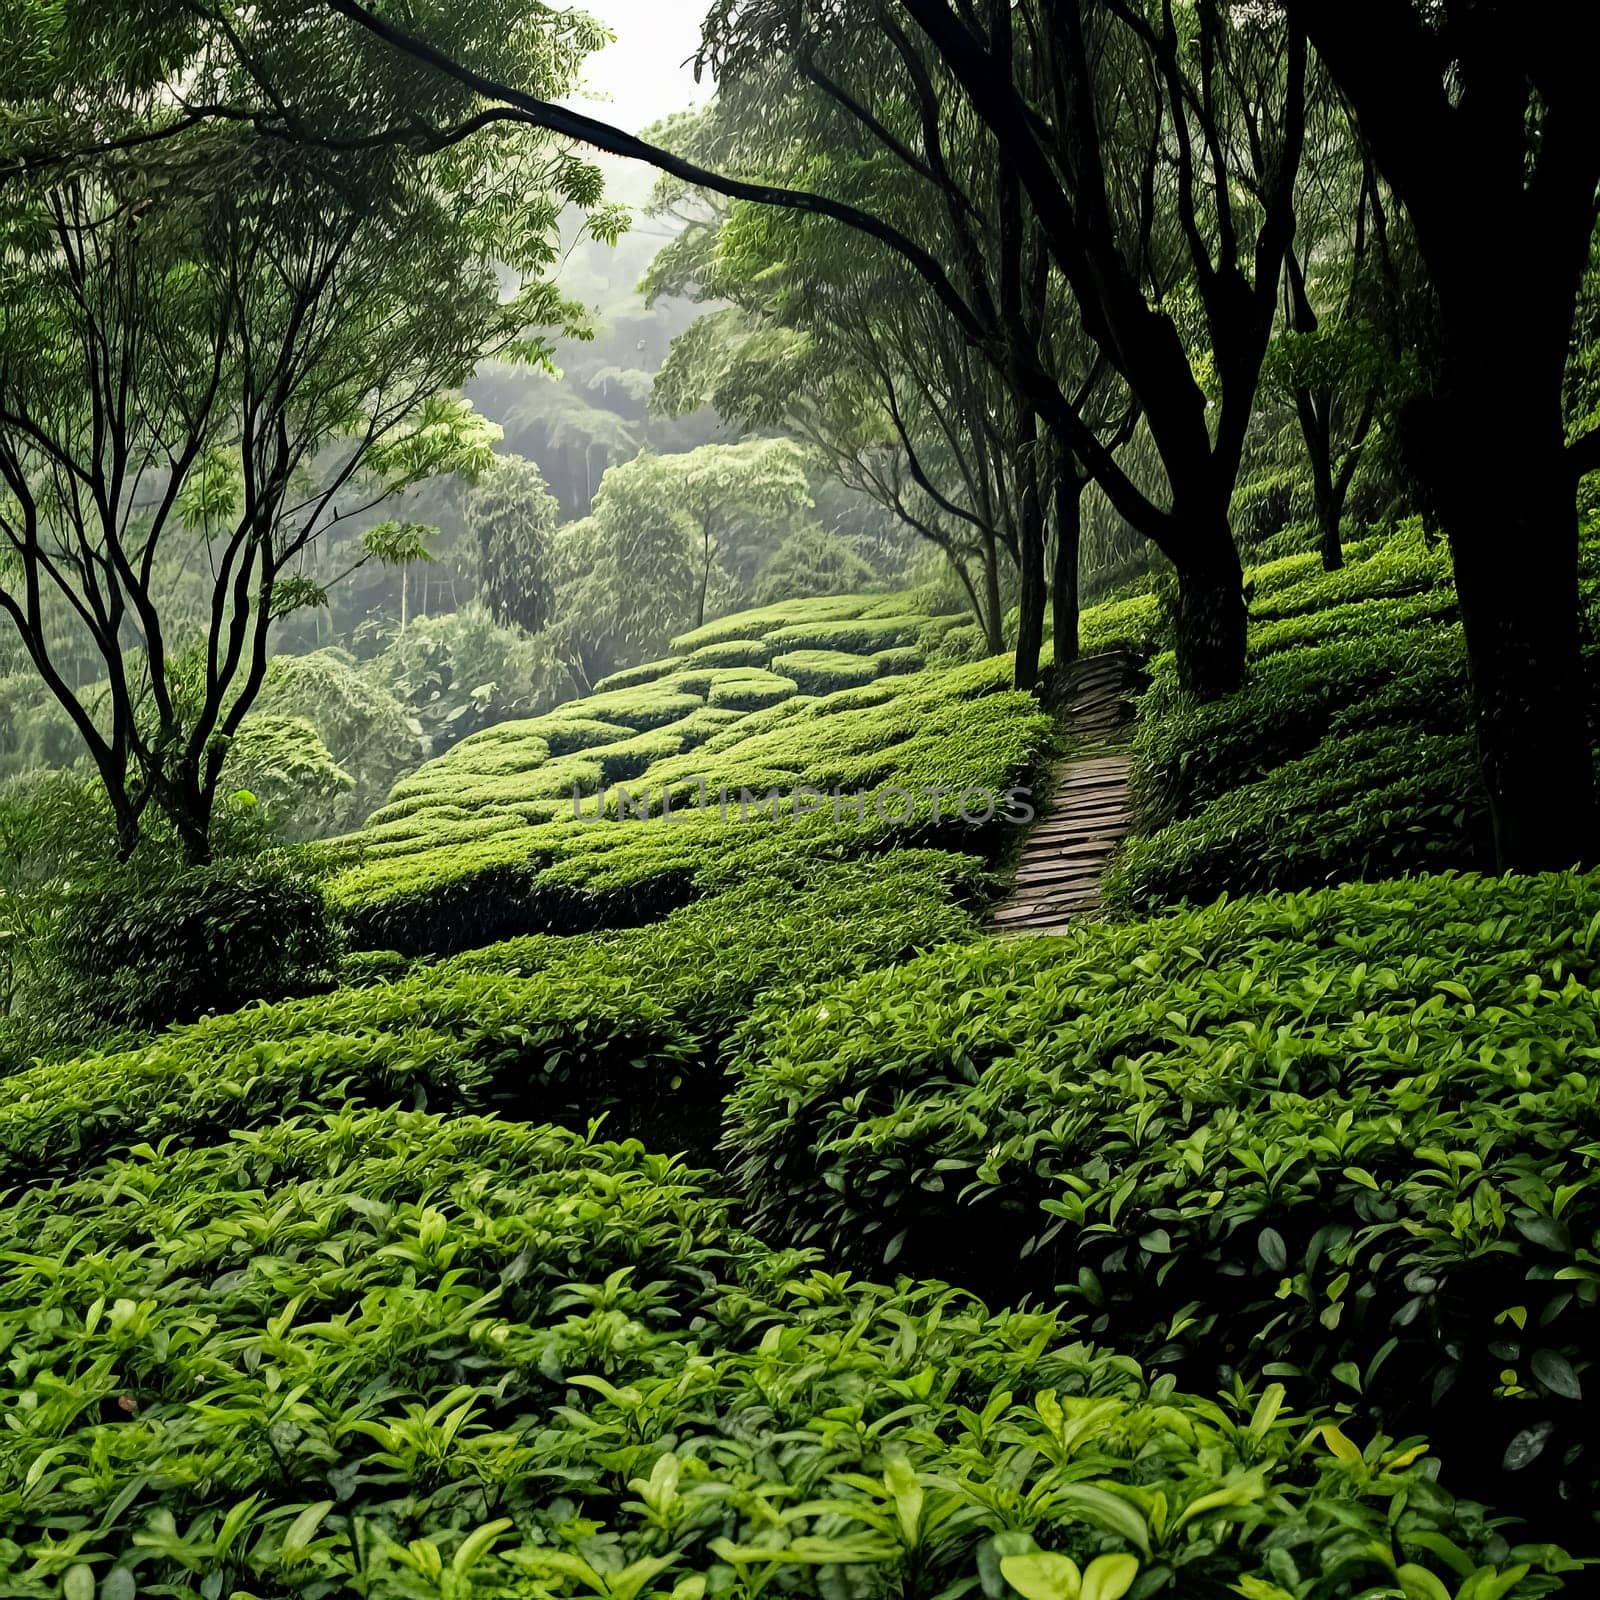 A man is walking through a field of green tea plants. by Alla_Morozova93